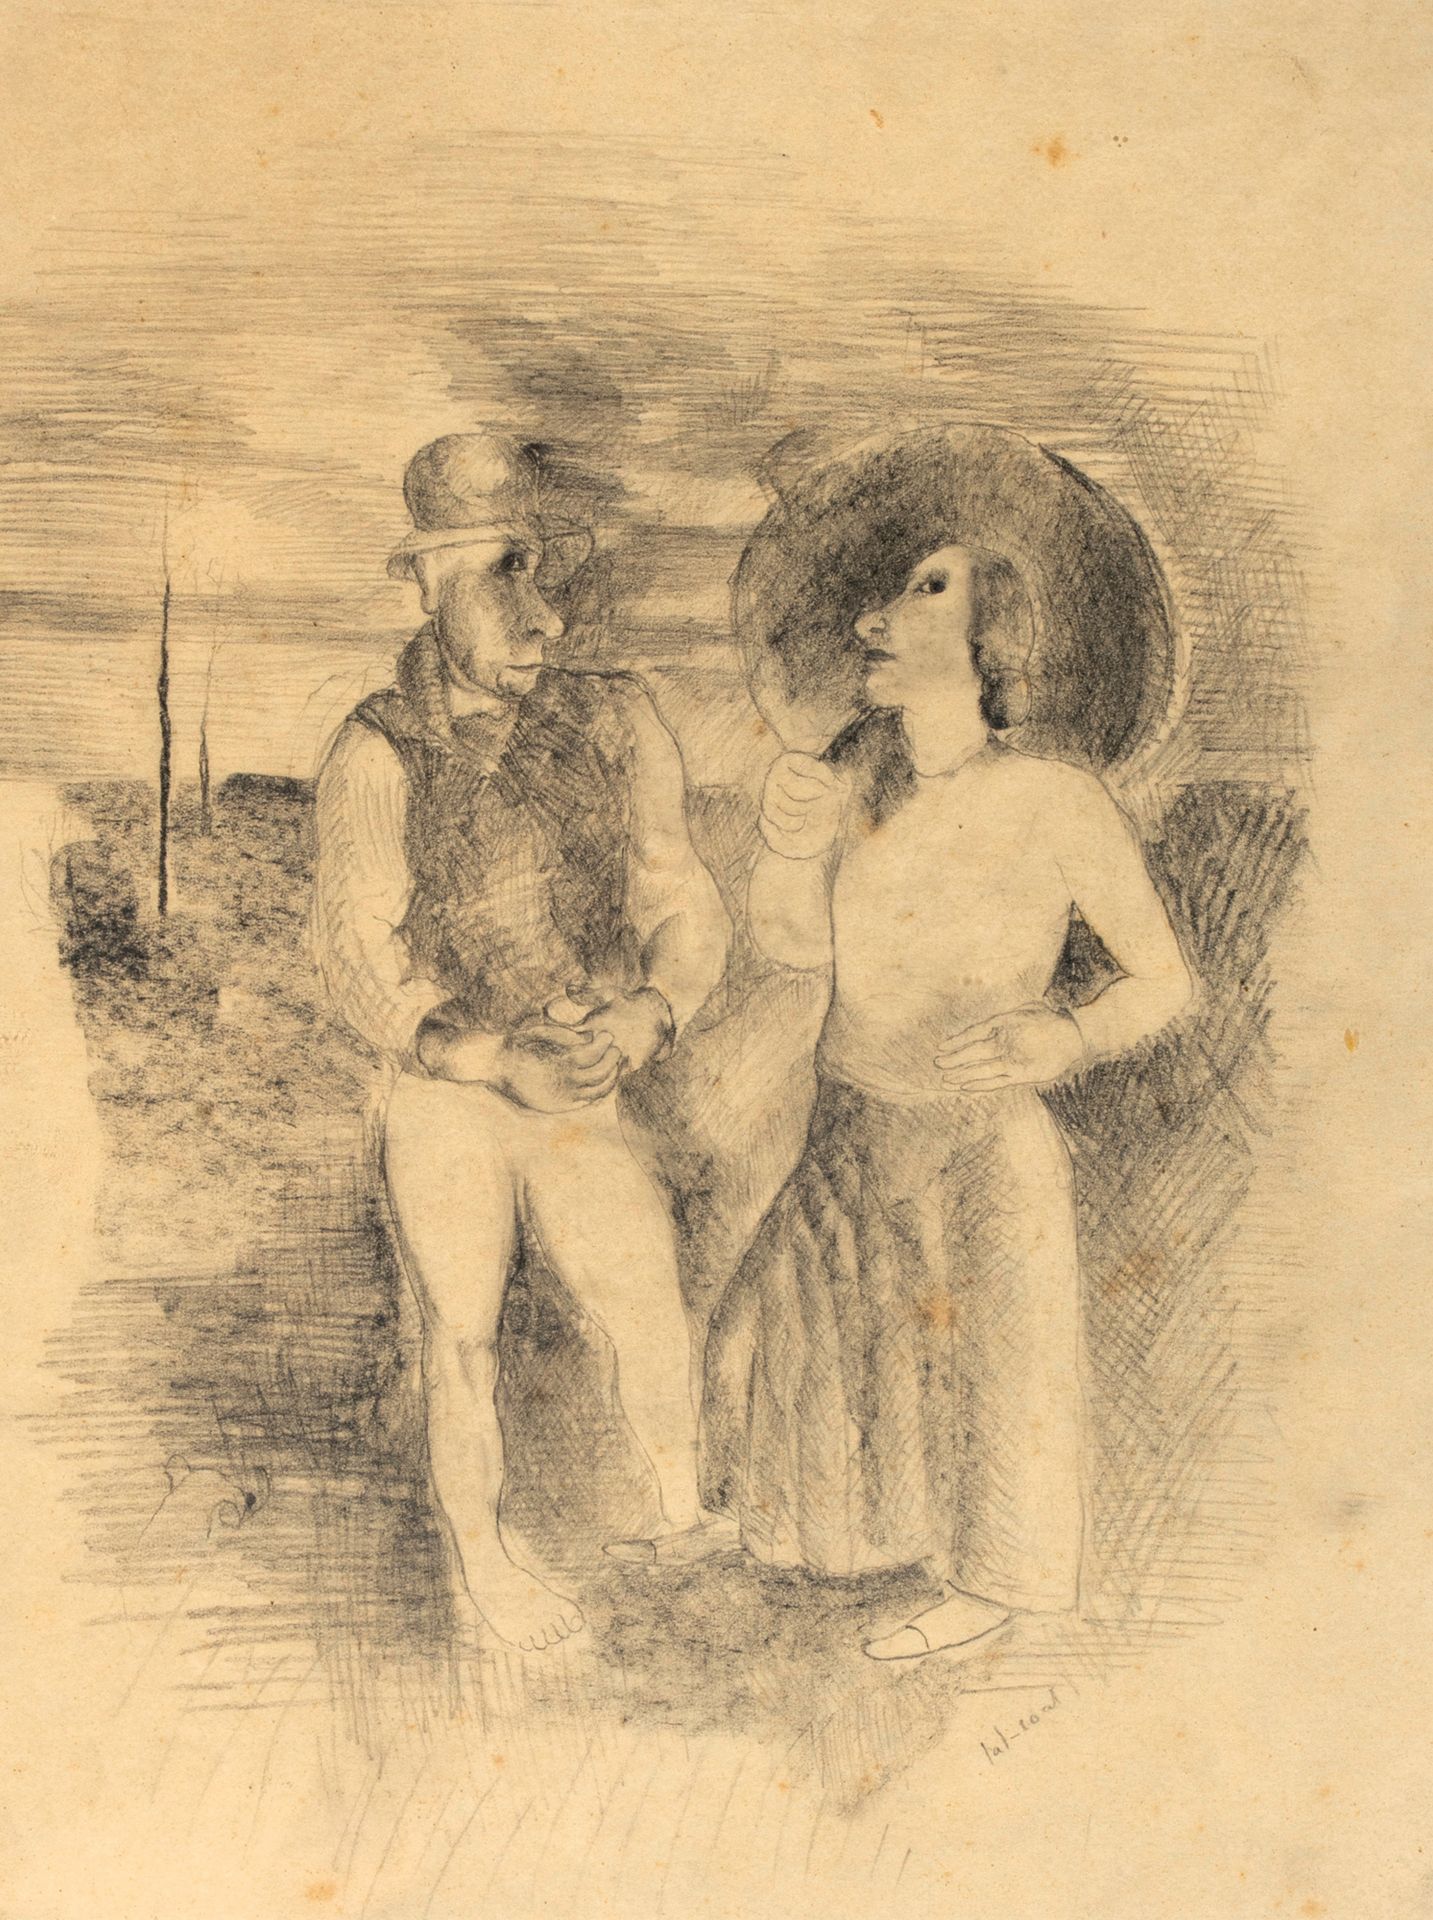 PIERRE TAL COAT (1905-1985) 这对夫妇
纸上铅笔、木炭，右下角有签名，有轻微晕染，有框架 31.5 x 24 cm